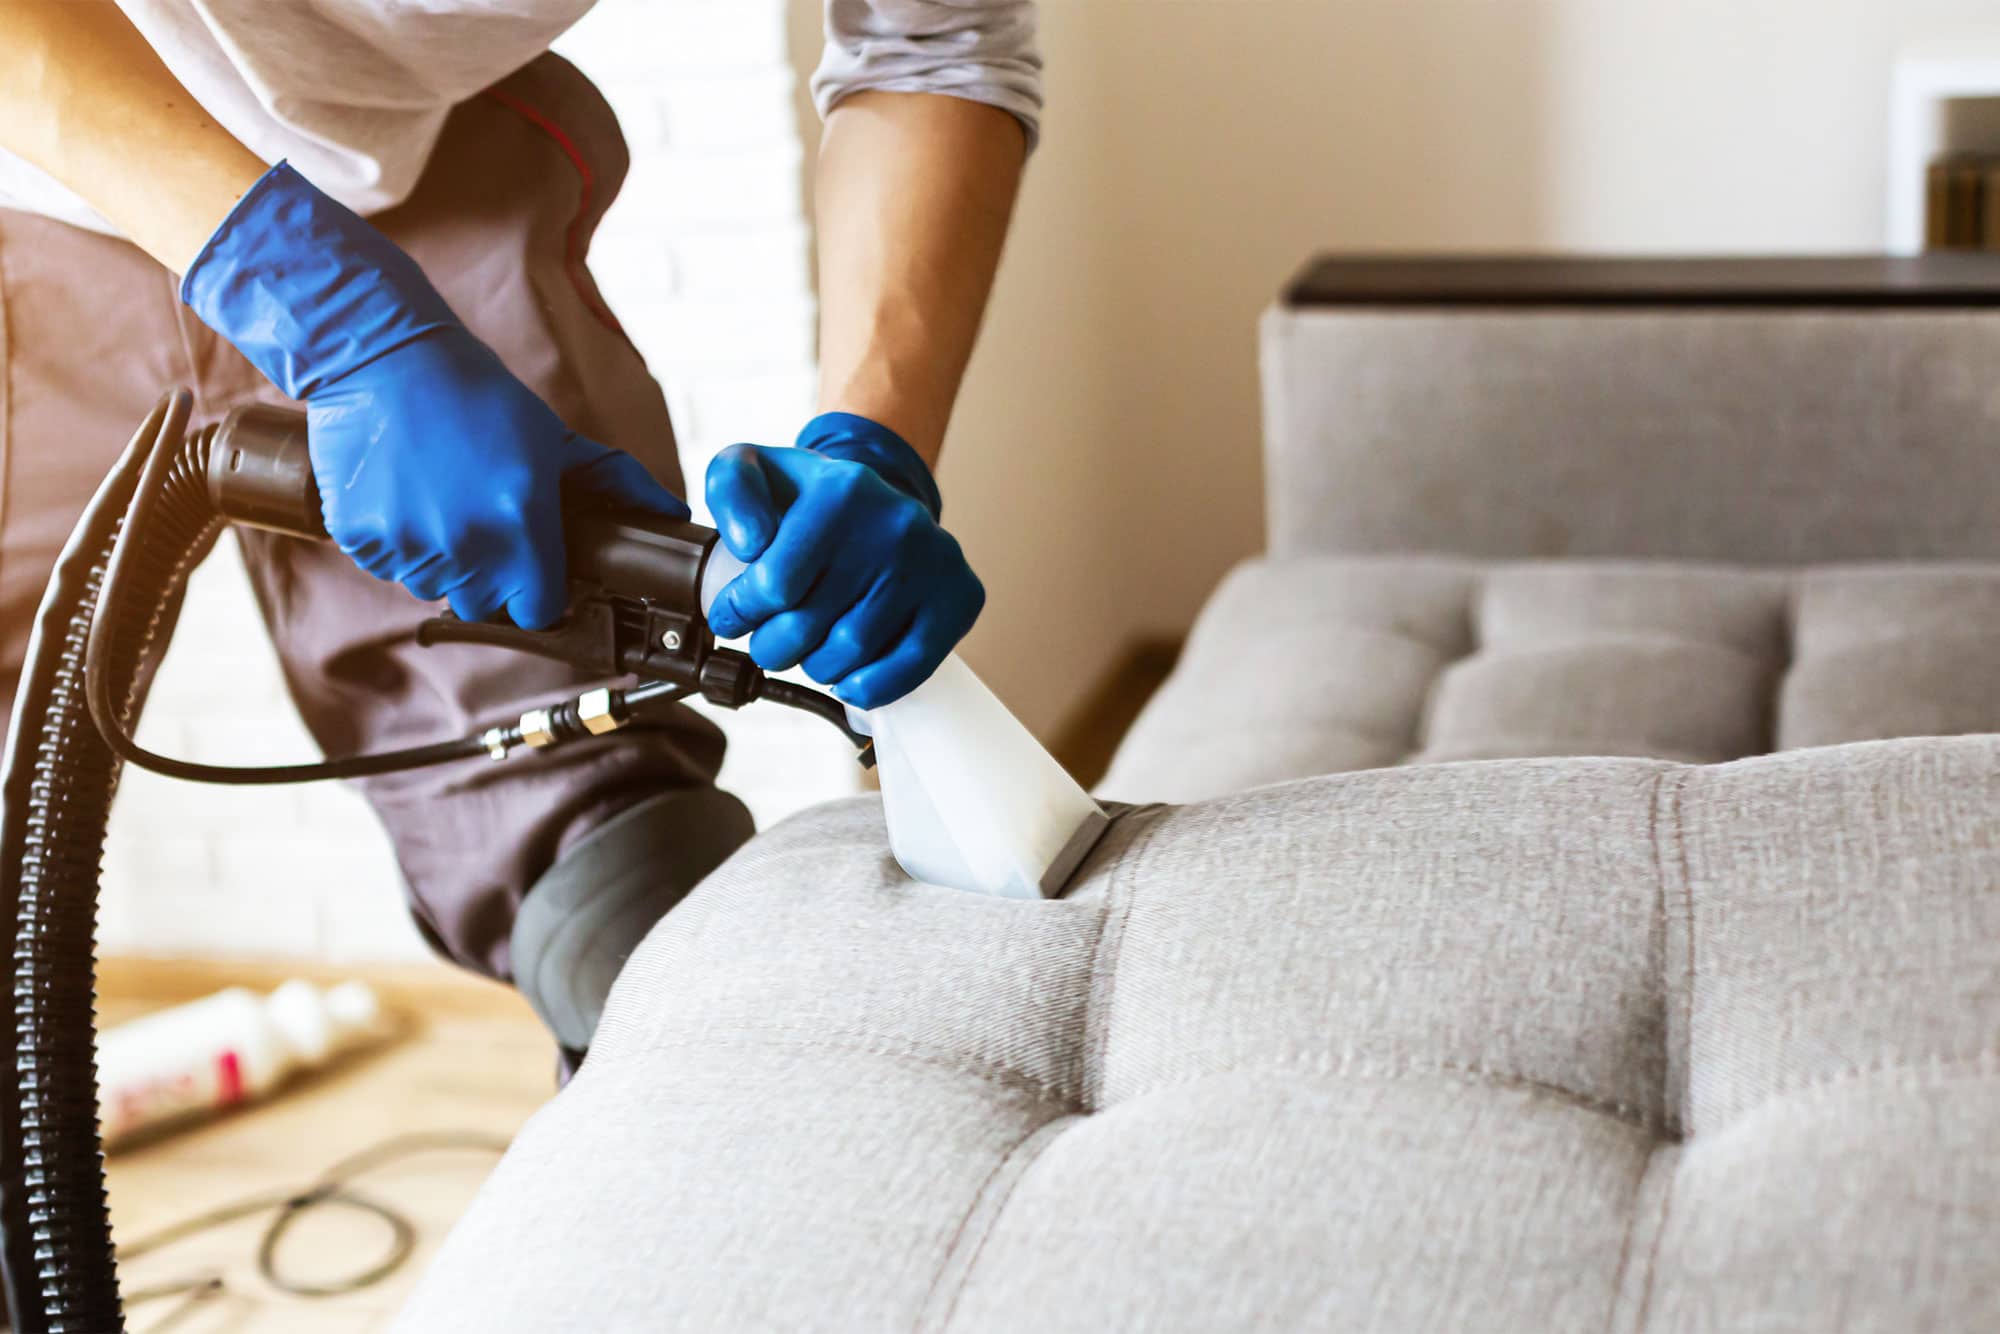 чистка диванов в домашних условиях от грязи